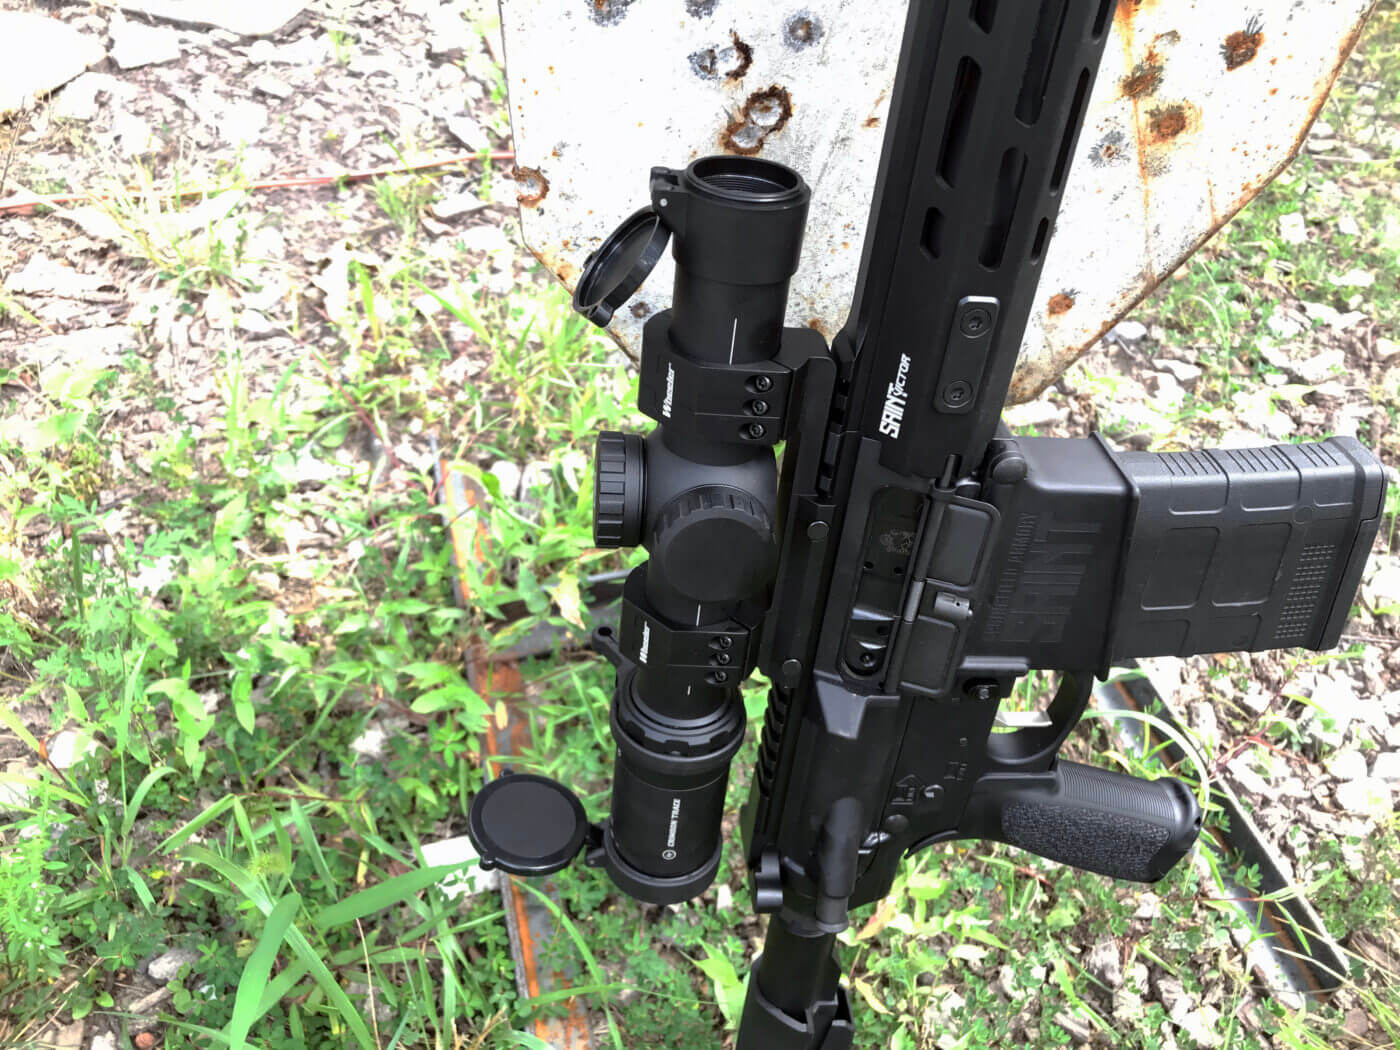 Rifle scope mounted on AR rifle